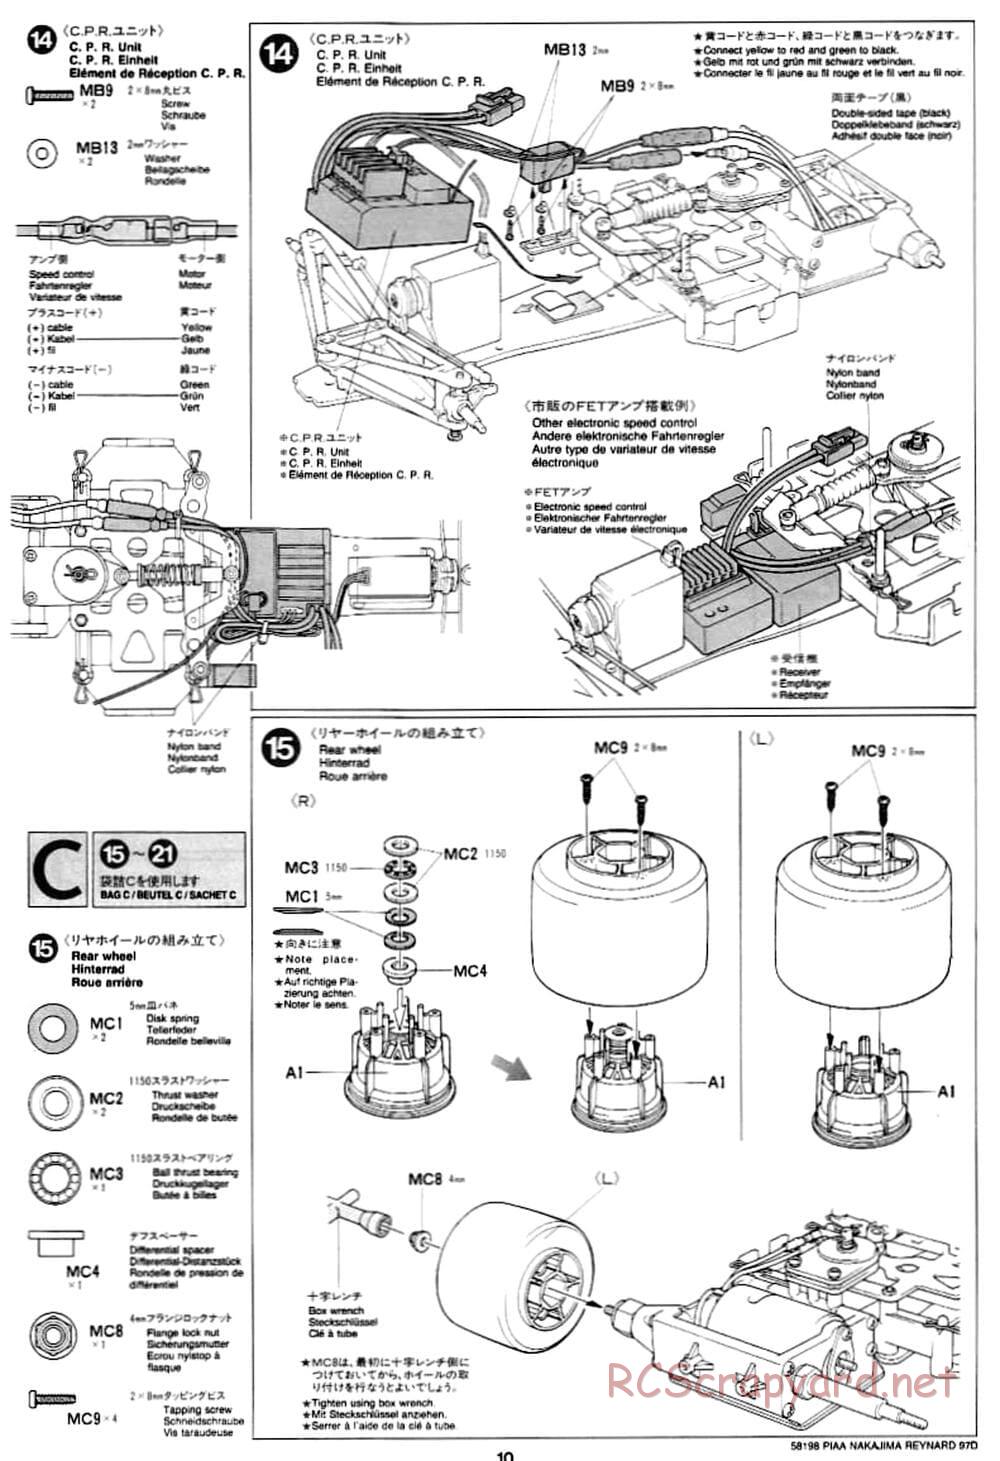 Tamiya - PIAA Nakajima Reynard 97D - F103 Chassis - Manual - Page 10